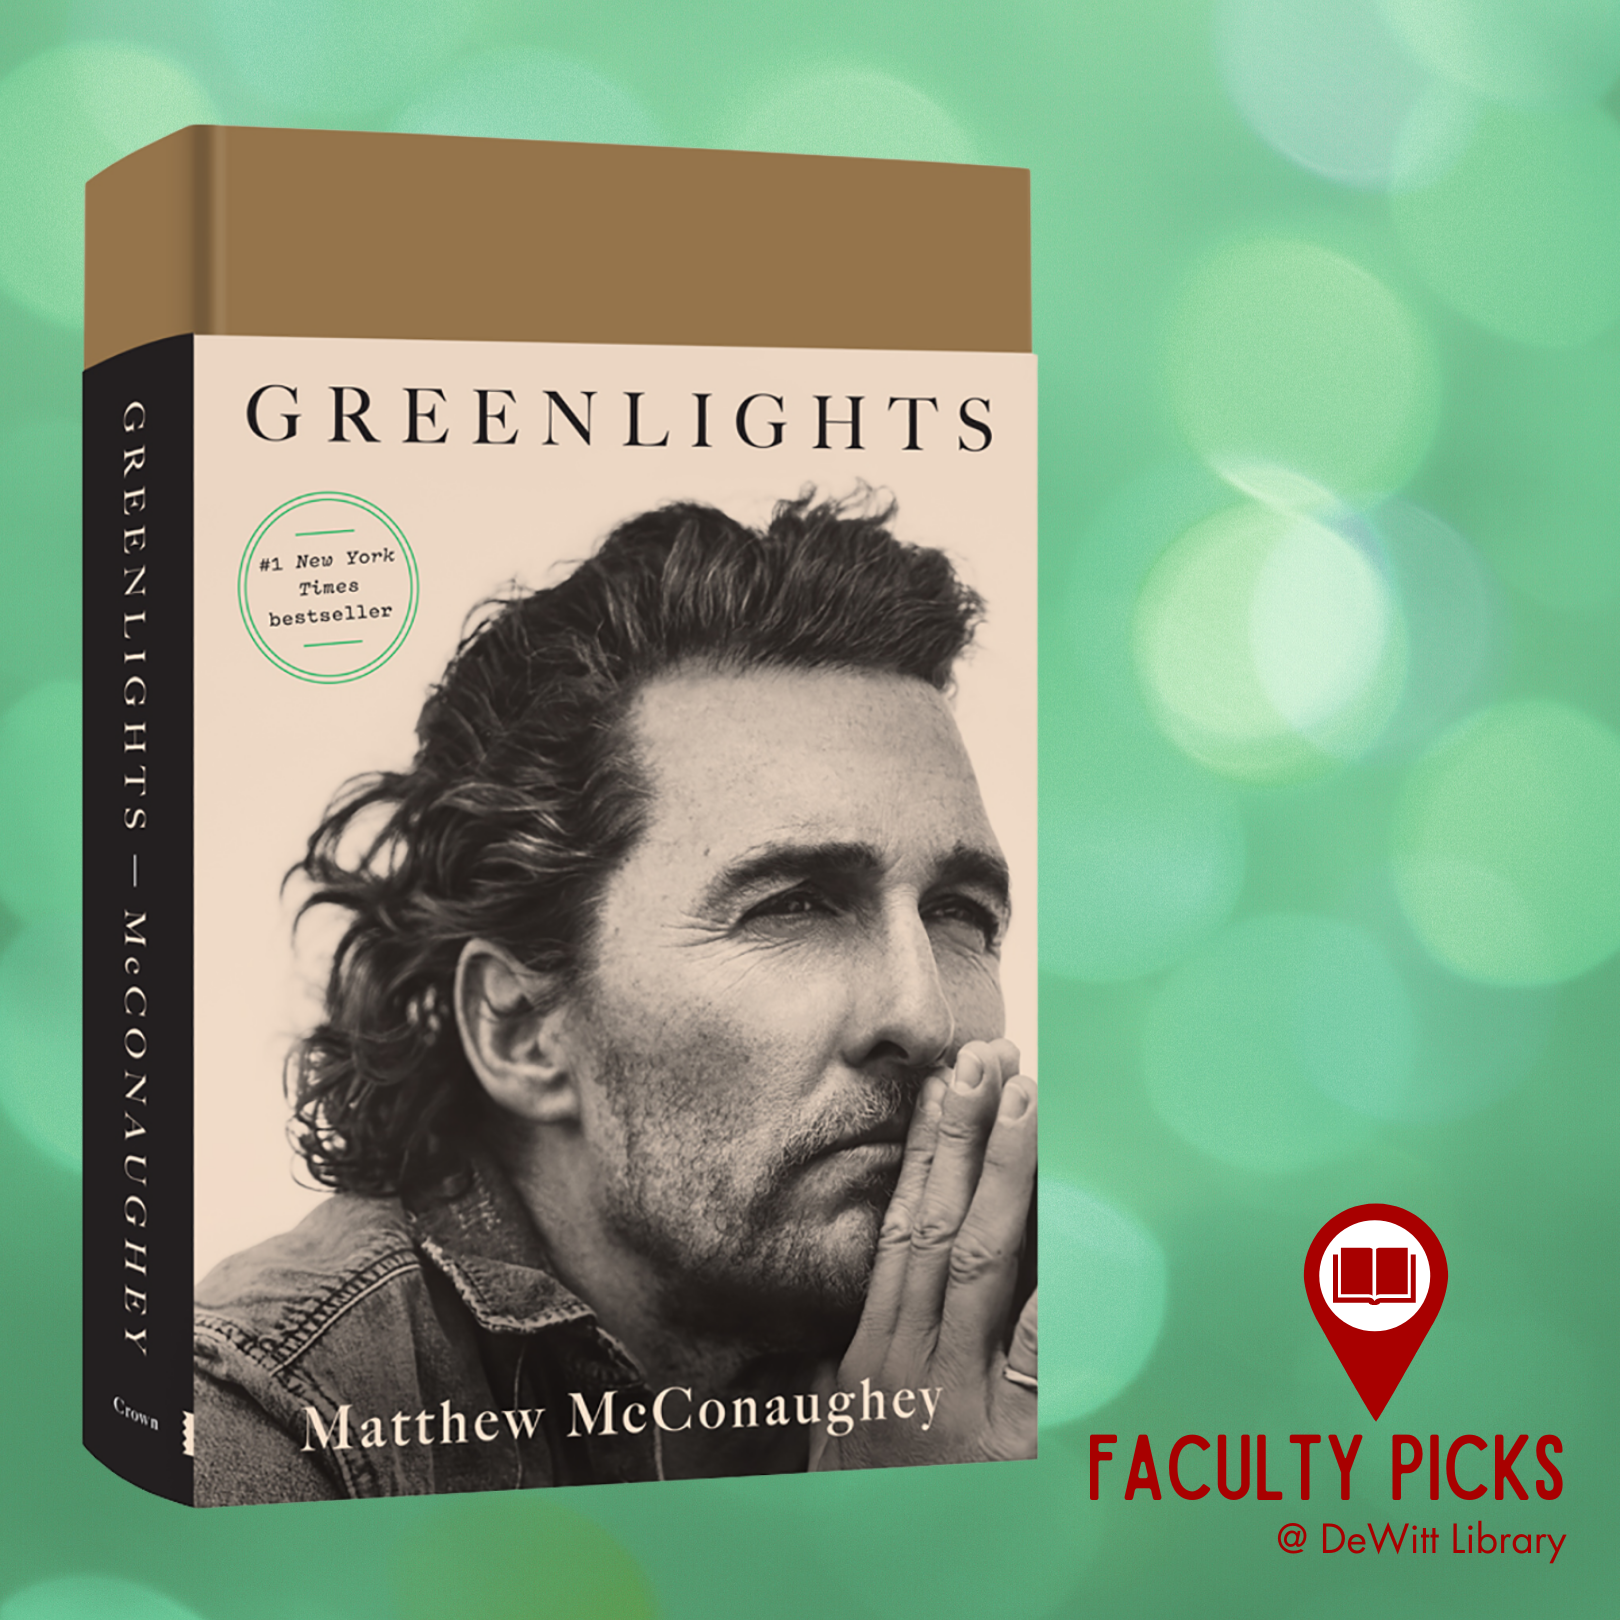 Faculty Picks - Greenlights by Matthew McConaughey 